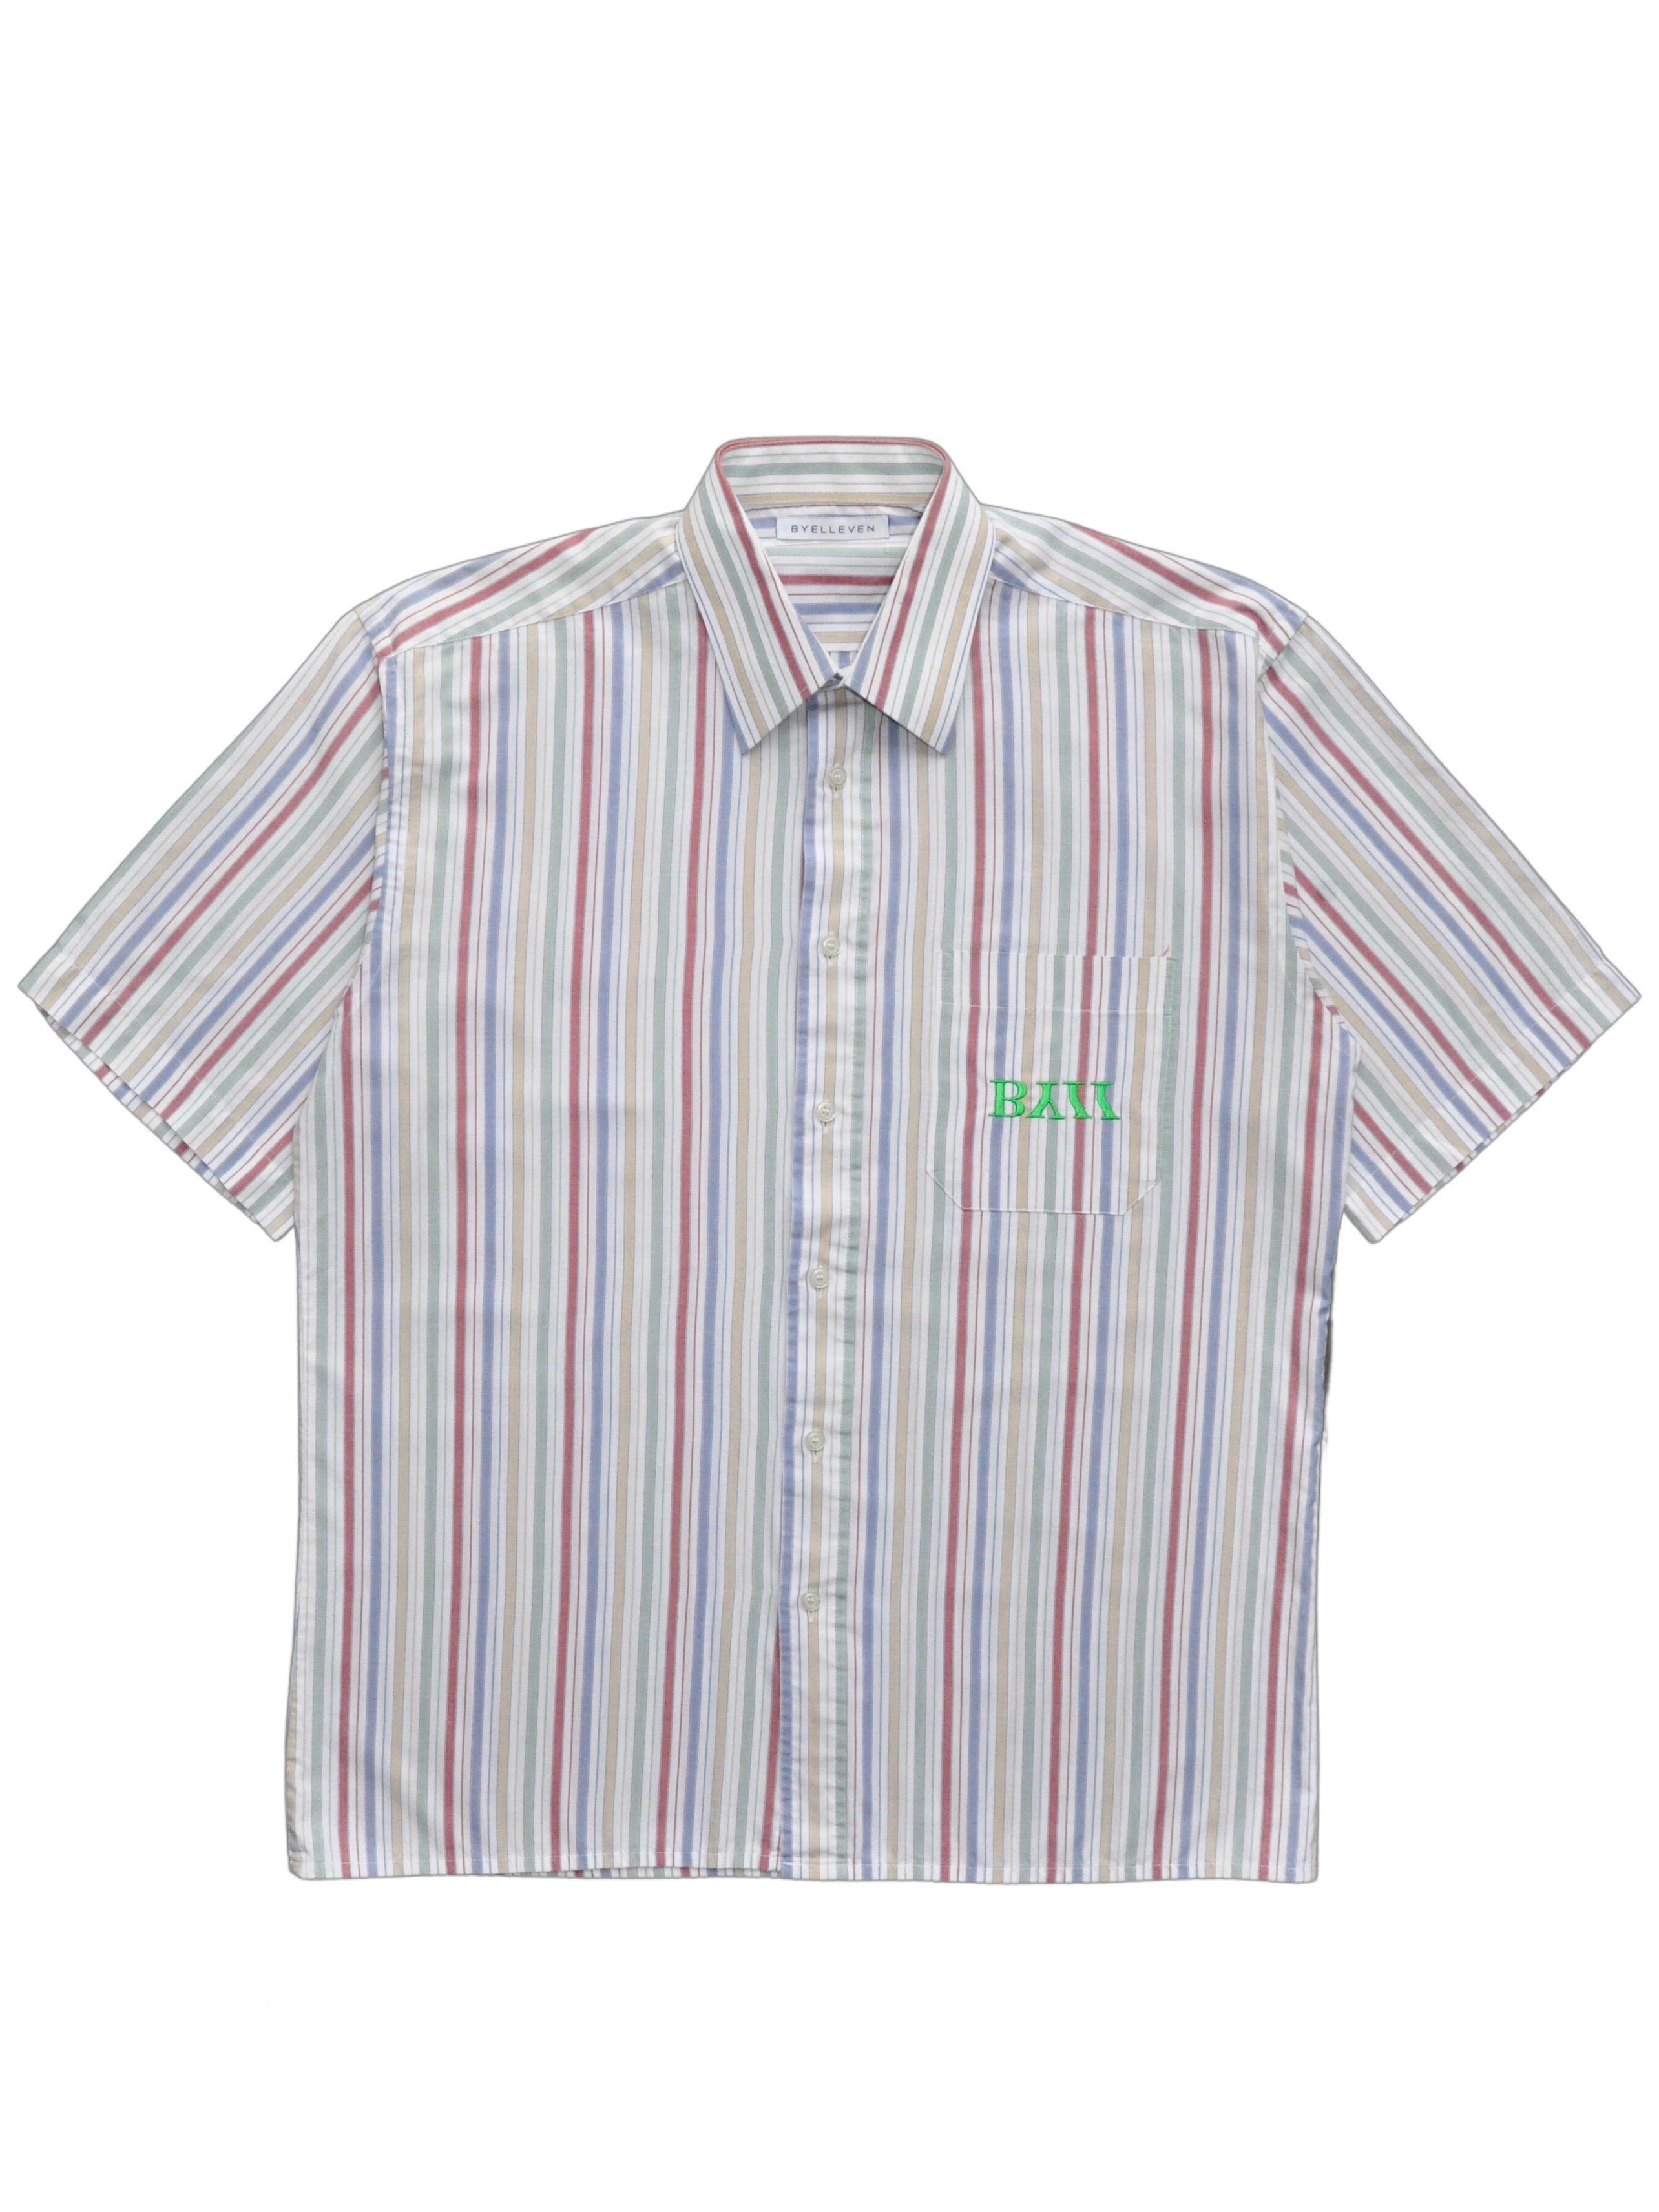 Reimagined Embroidered Logo Short Sleeve Shirt - Primary Stripe